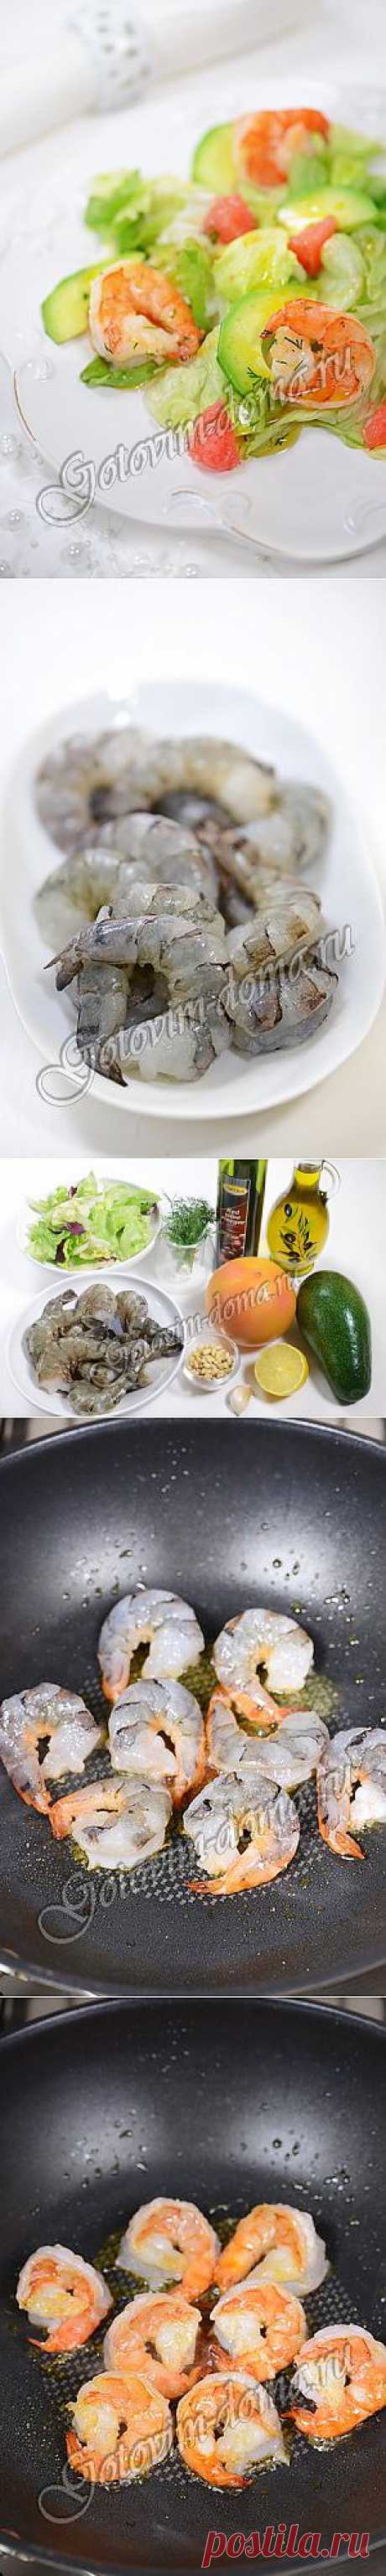 Рецепт: Салат с креветками, авокадо и грейпфрутом